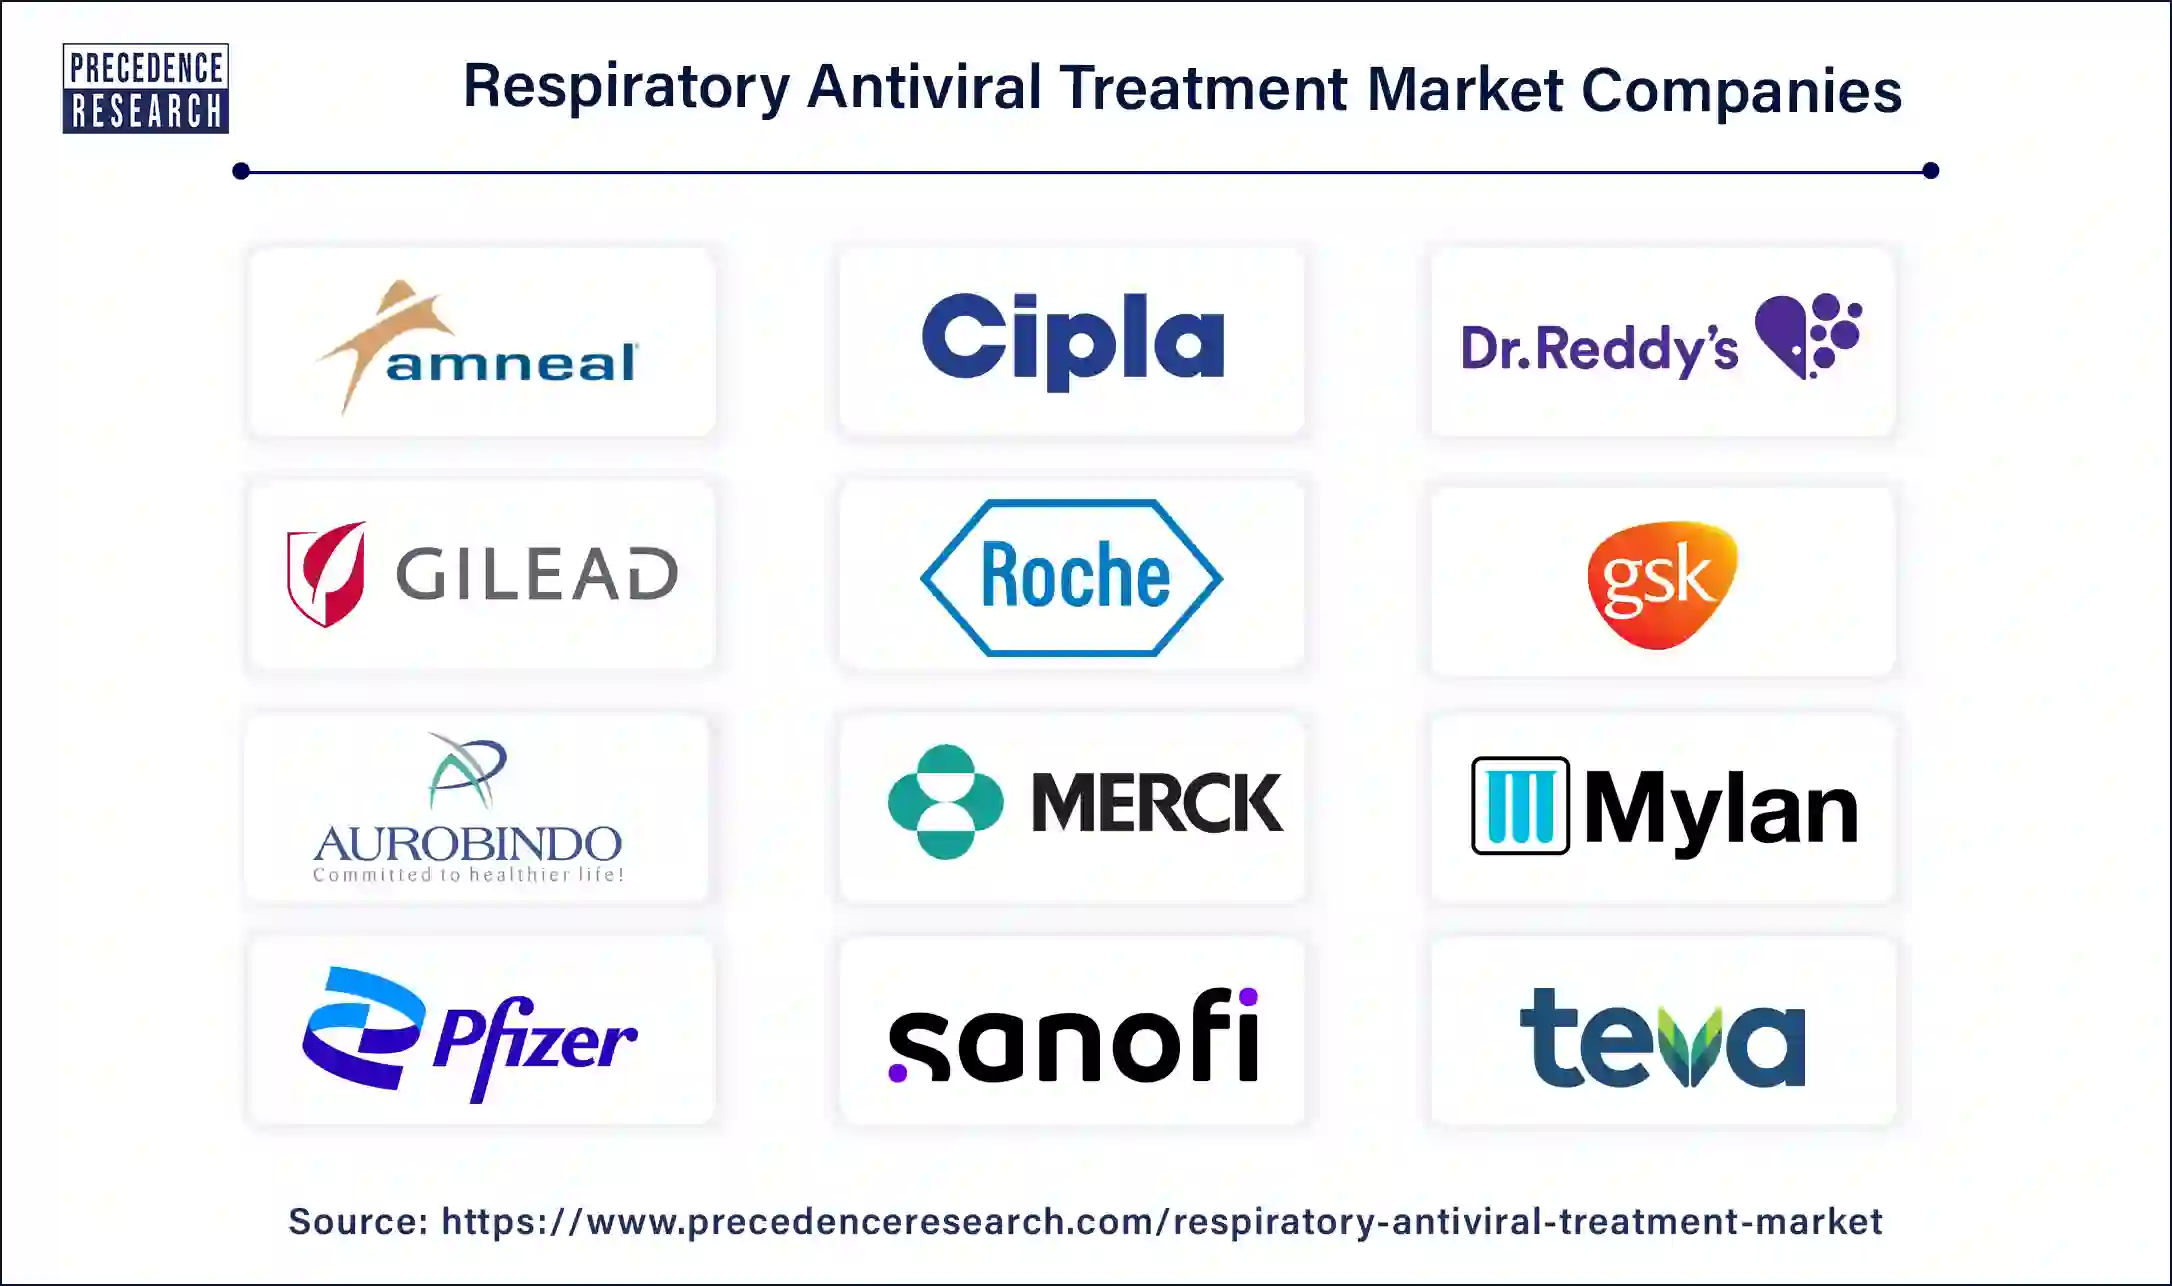 Respiratory Antiviral Treatment Companies